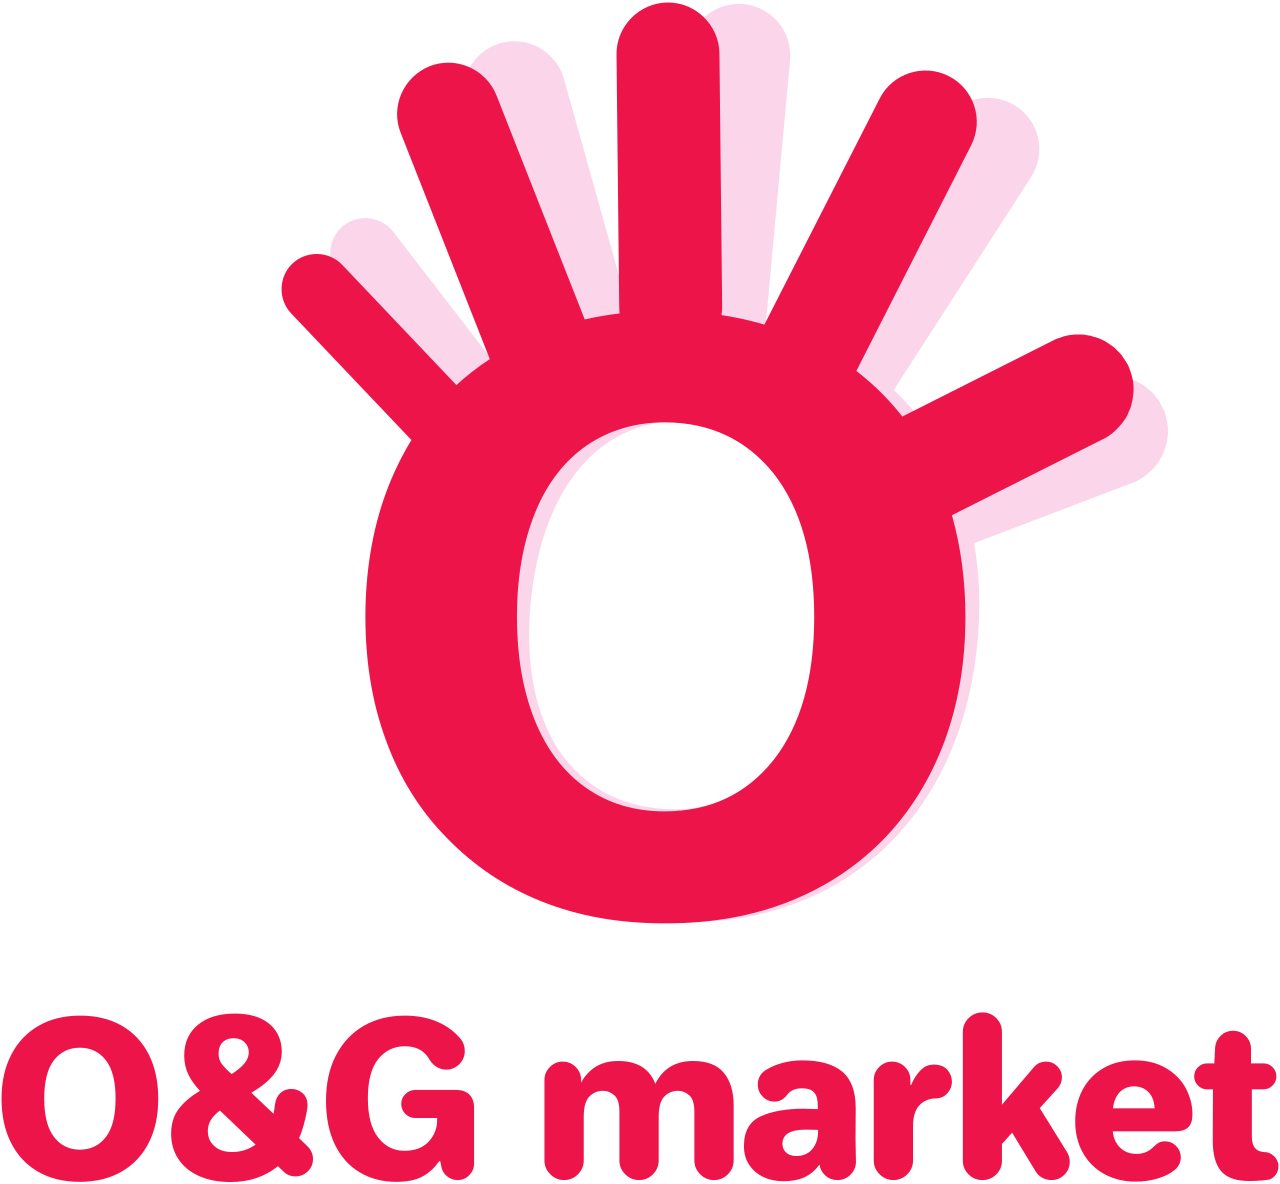 O&G market's web page